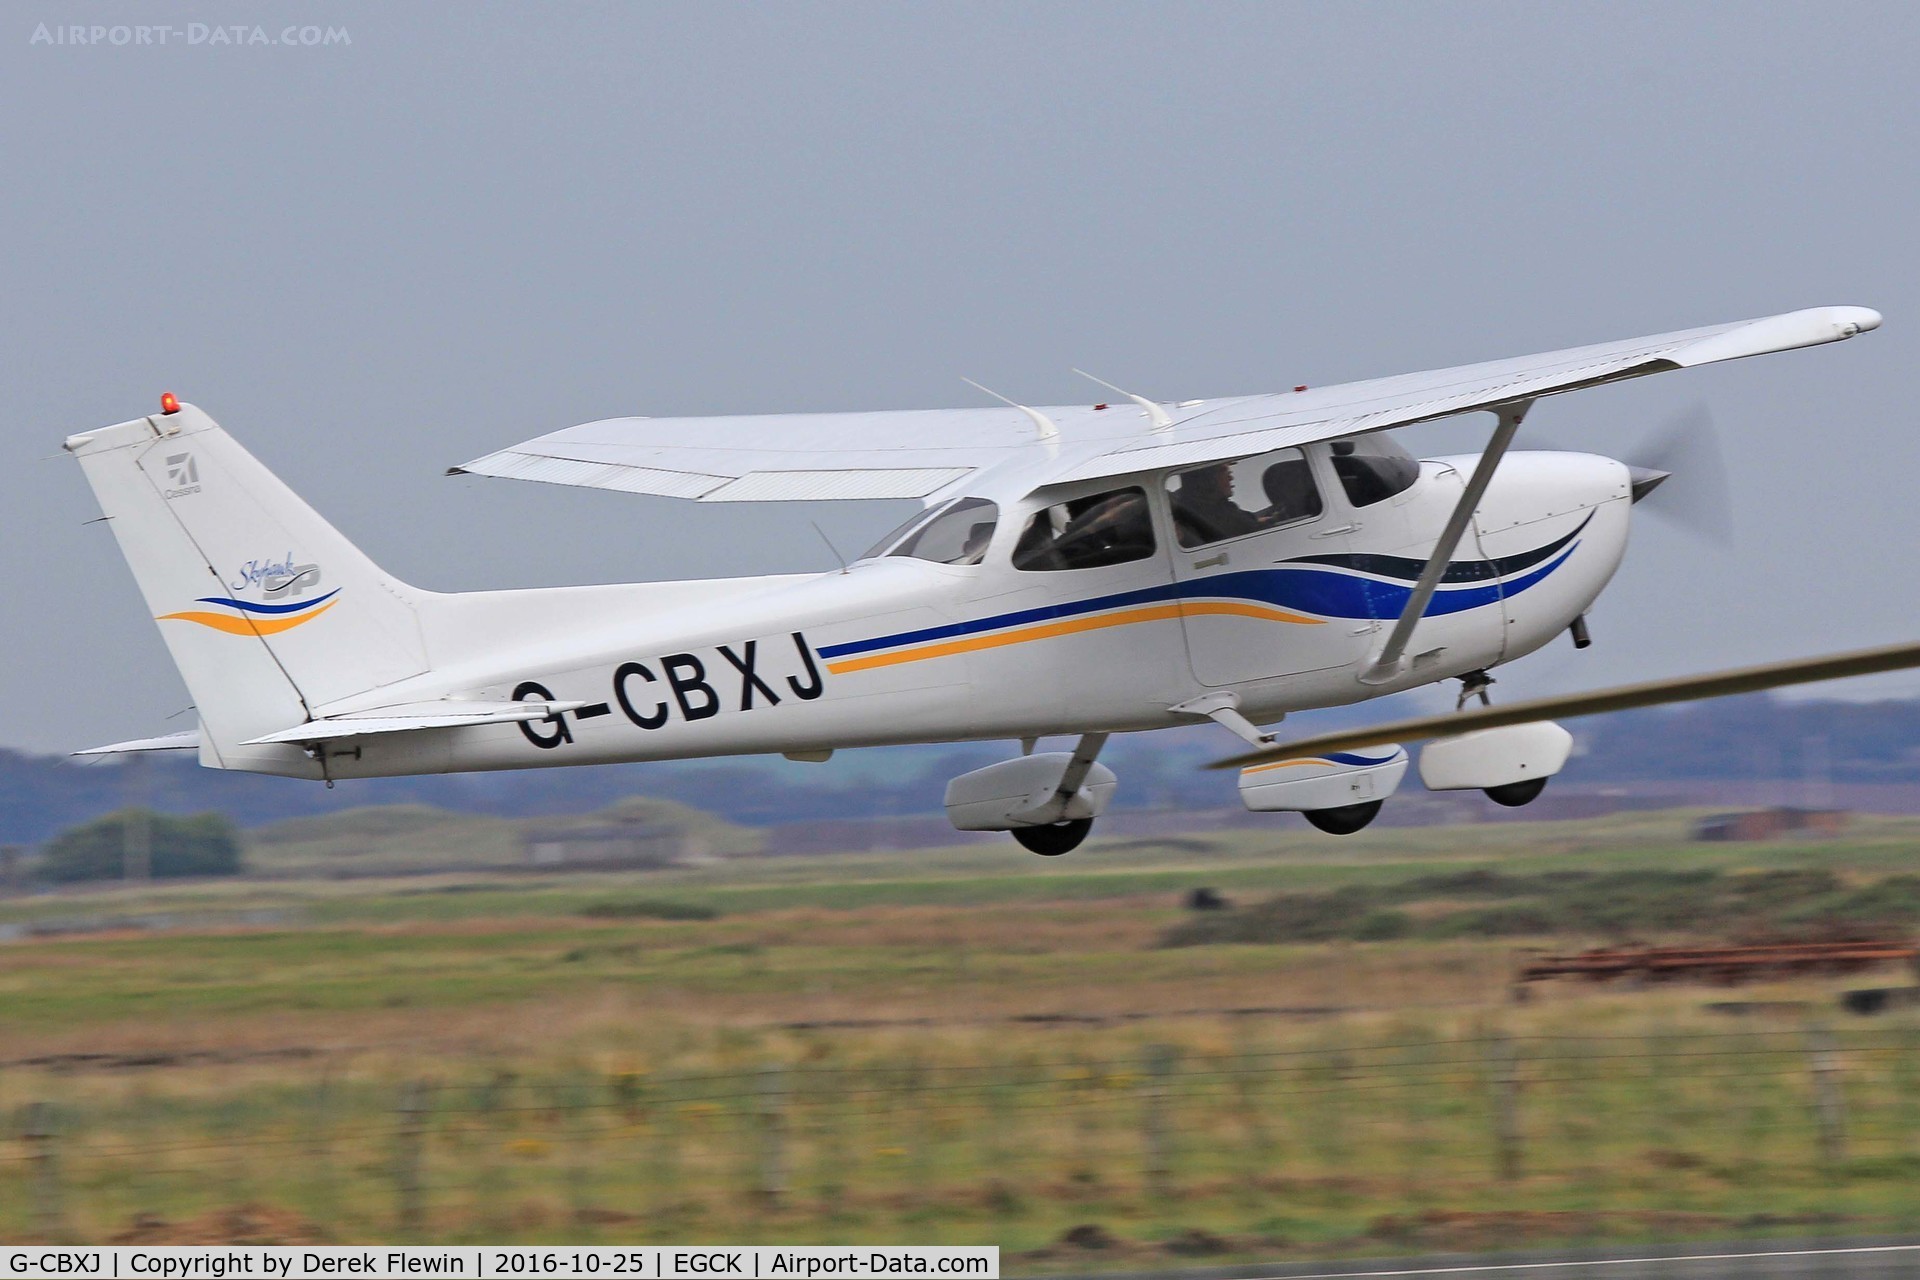 G-CBXJ, 1999 Cessna 172S Skyhawk C/N 172S8125, Skyhawk, Caernarfon based, previously N2391J, seen departing runway 07.